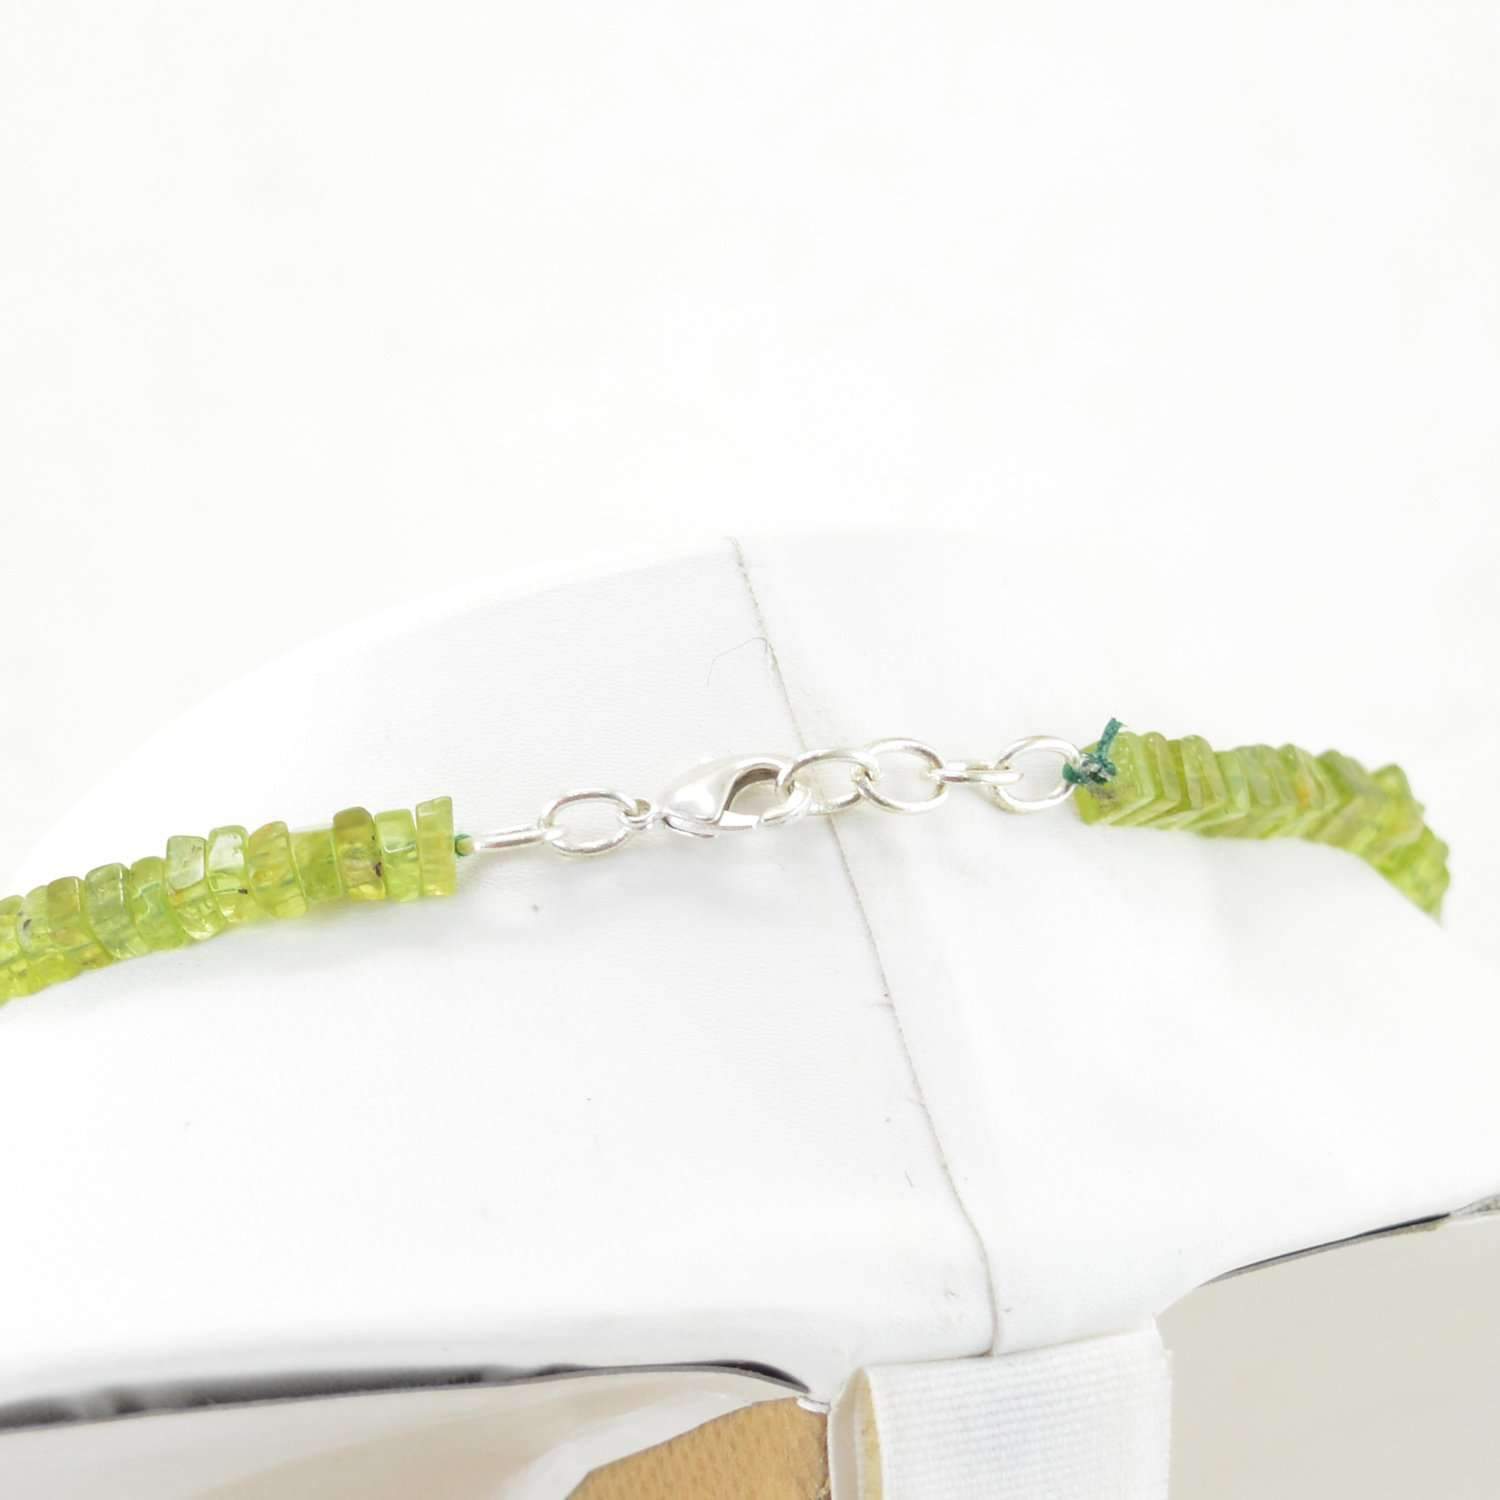 gemsmore:20 Inches Long Green Peridot Natural Unheated Beads Necklace